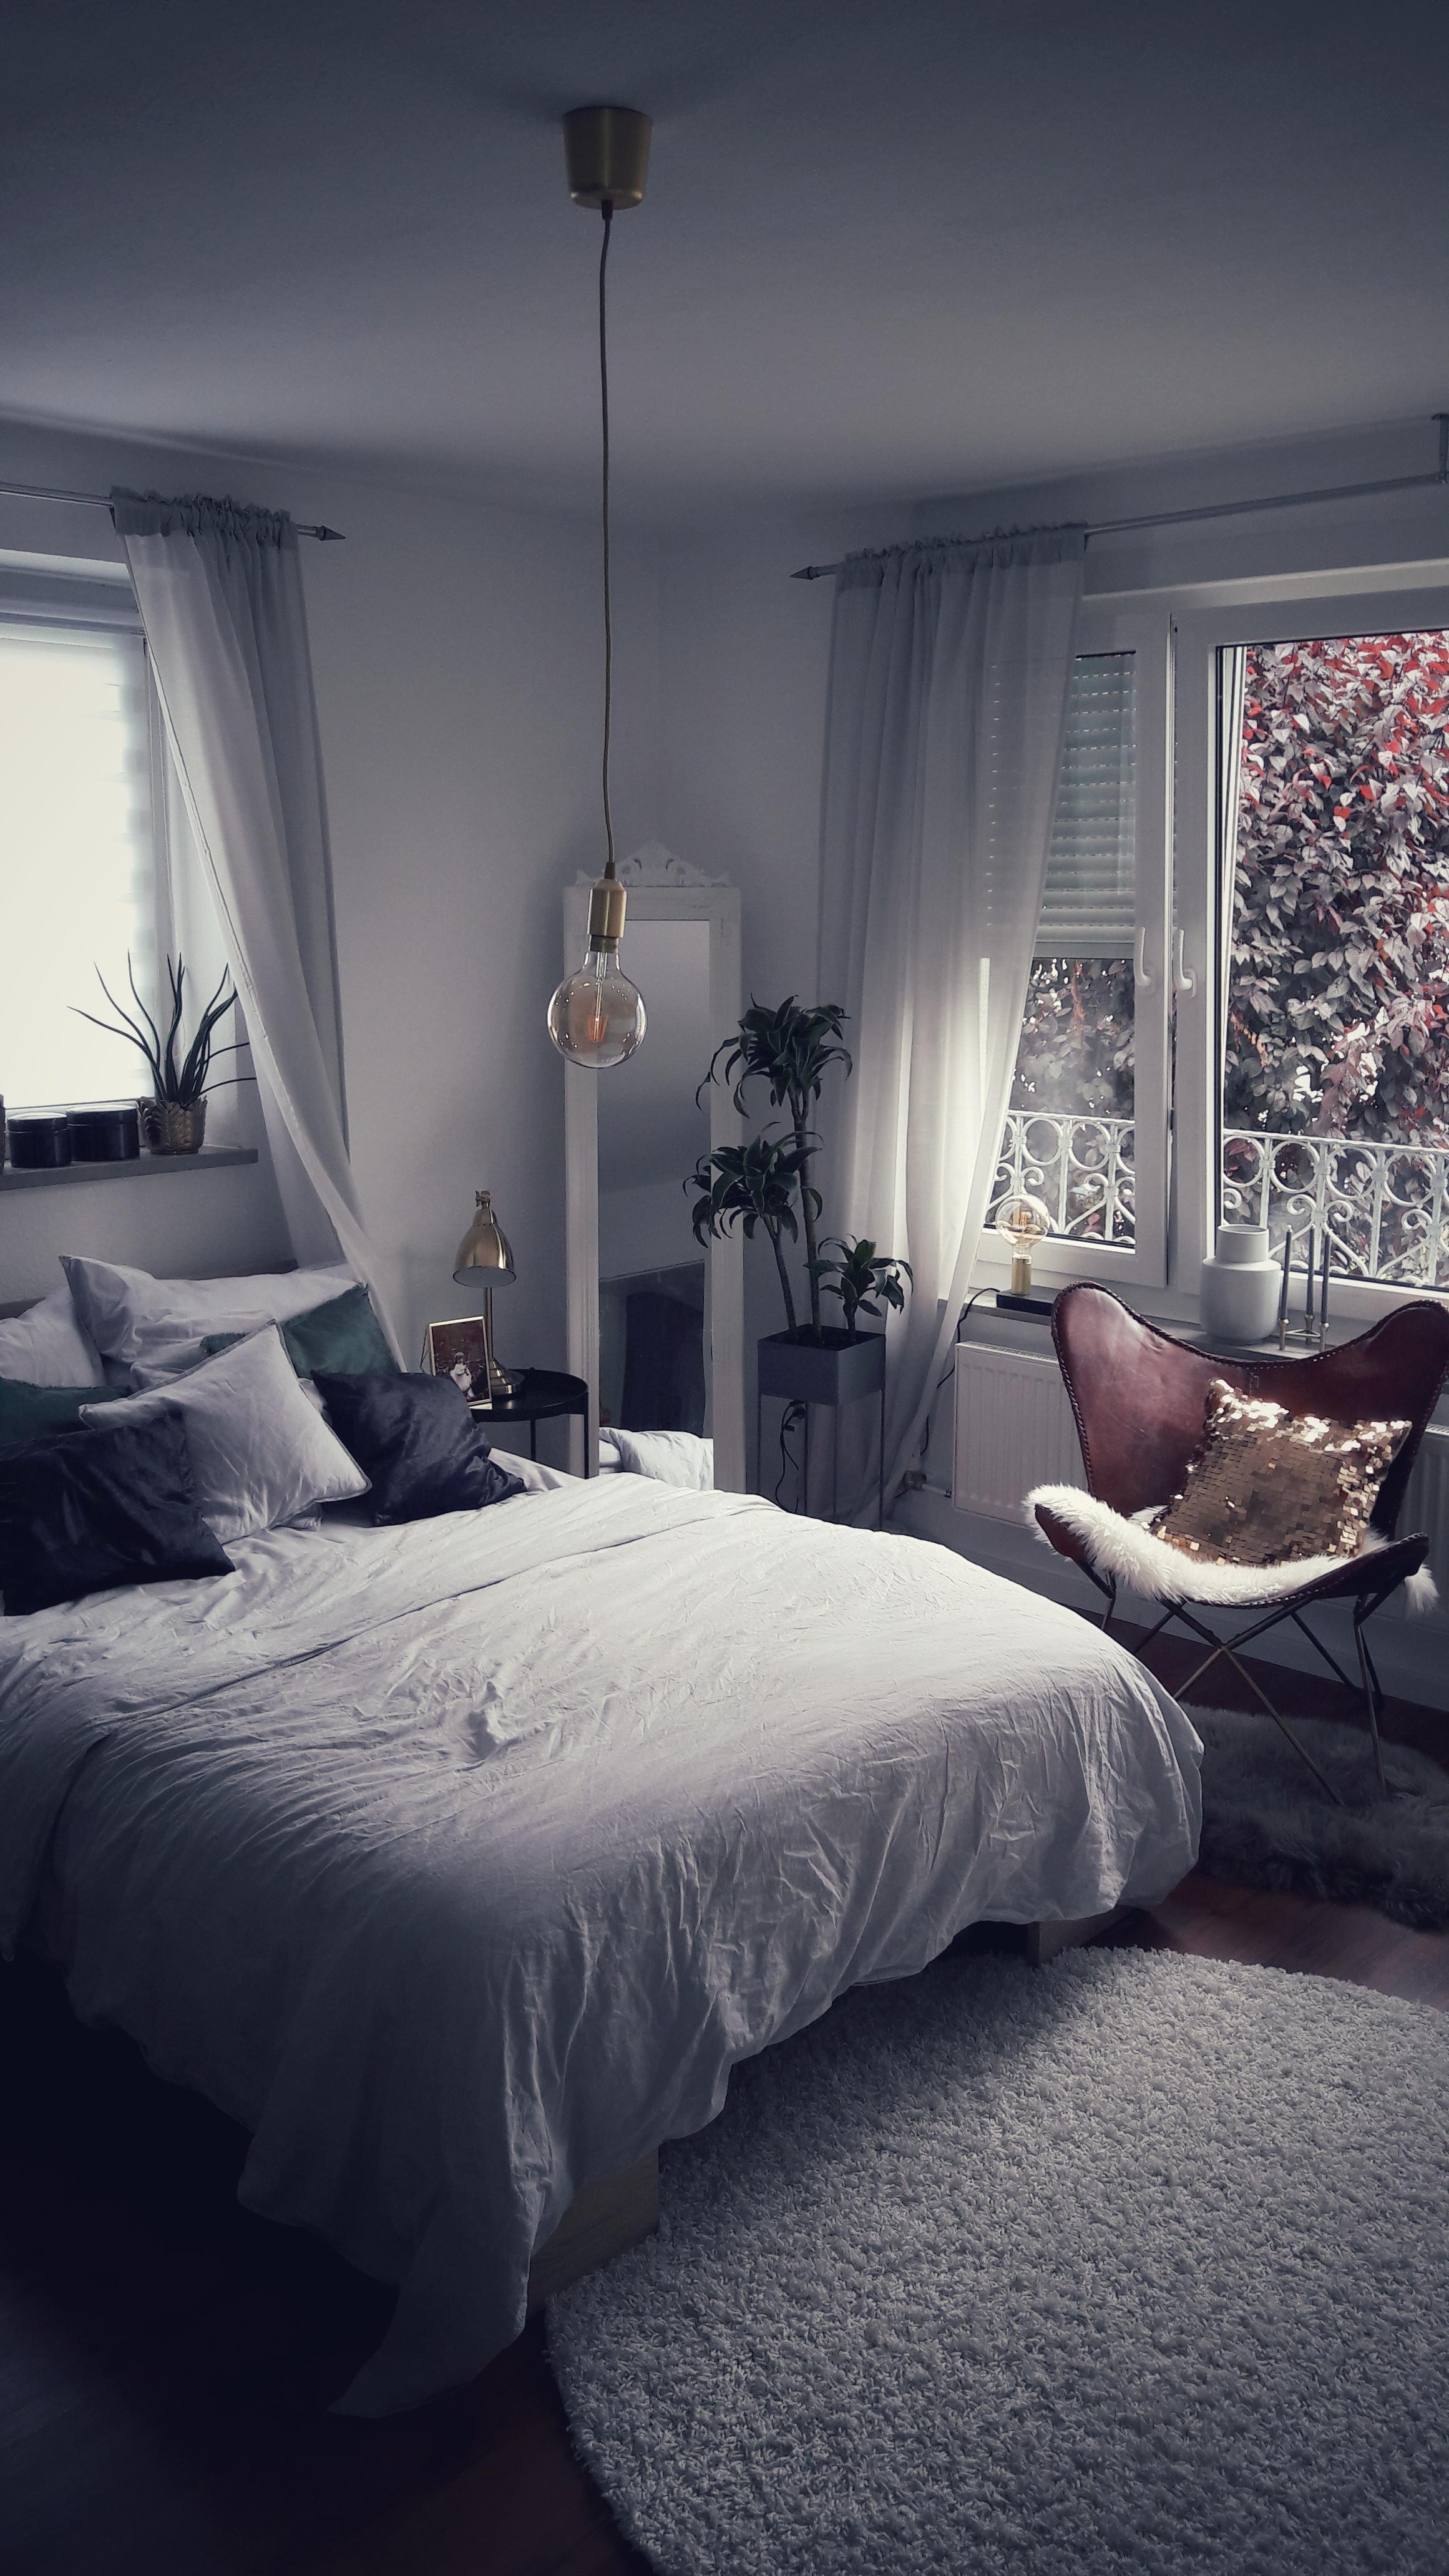 #Schlafzimmer Einblick #grey #gold #black #Glamour #Marmorlampe #Chilllounge #Scandiystyle #Ledersessel 